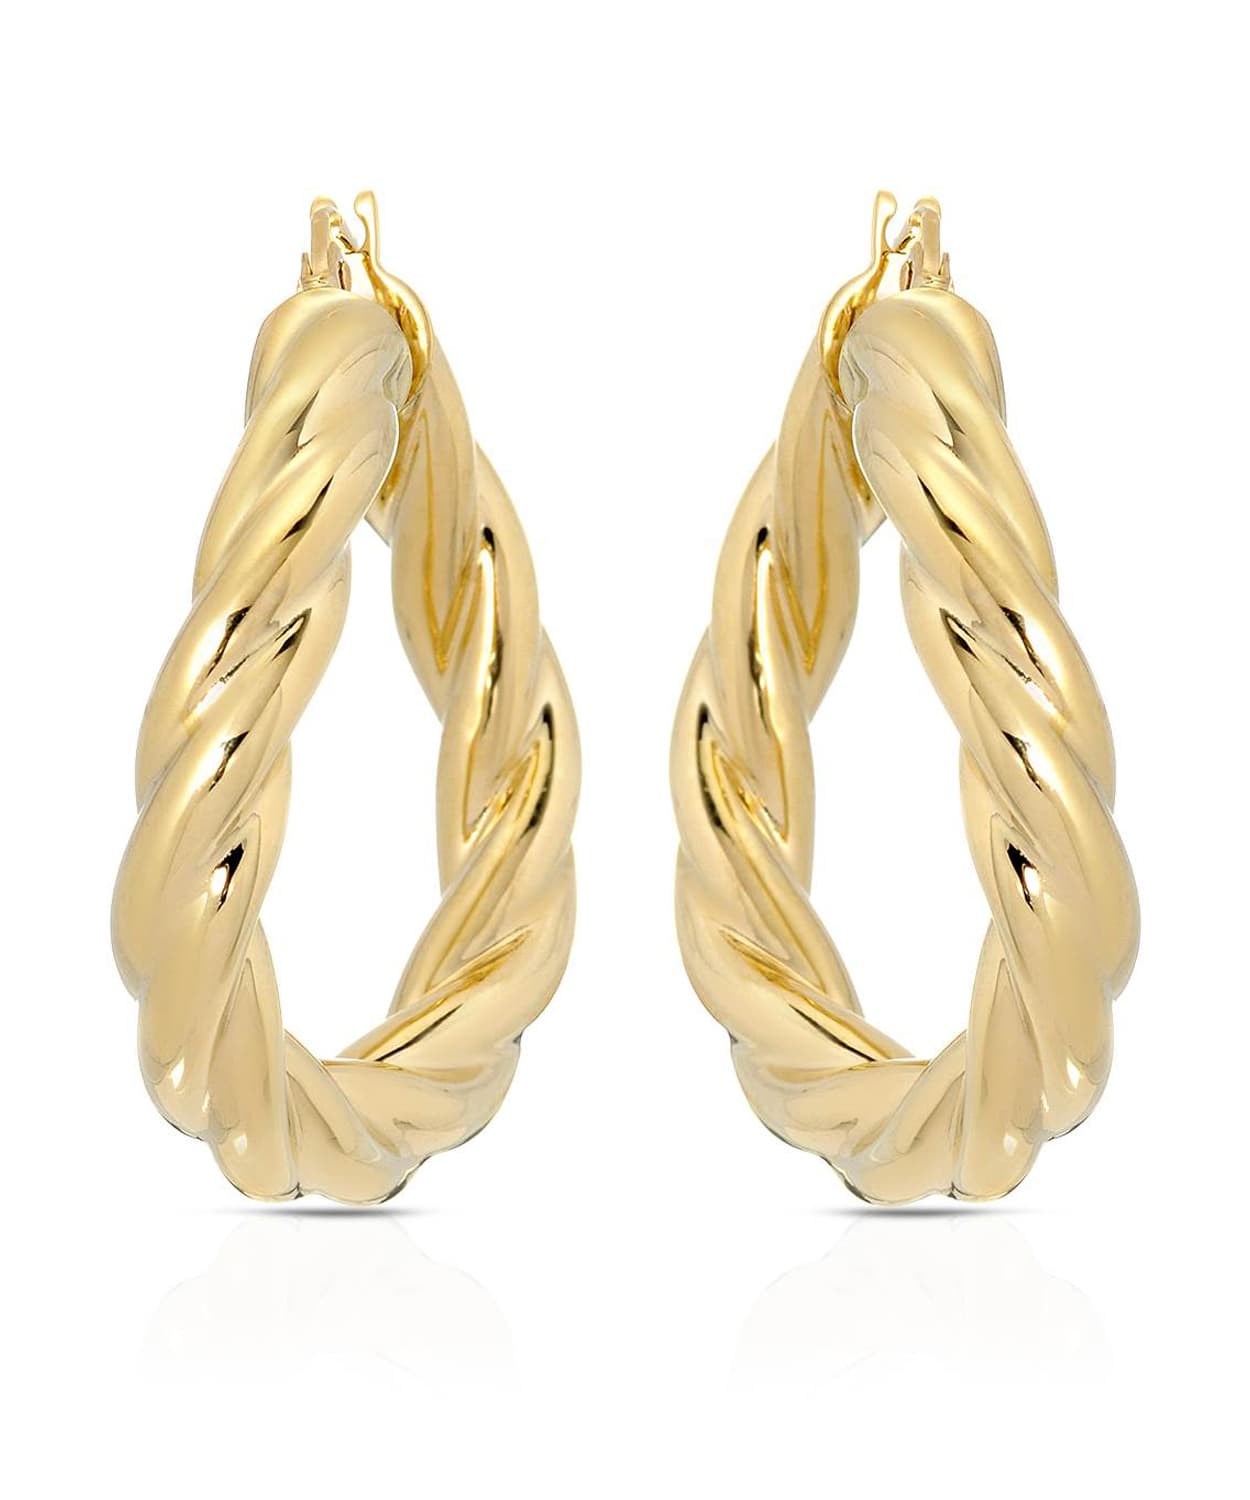 Esemco 14k Yellow Gold Twist Hoop Earrings View 1